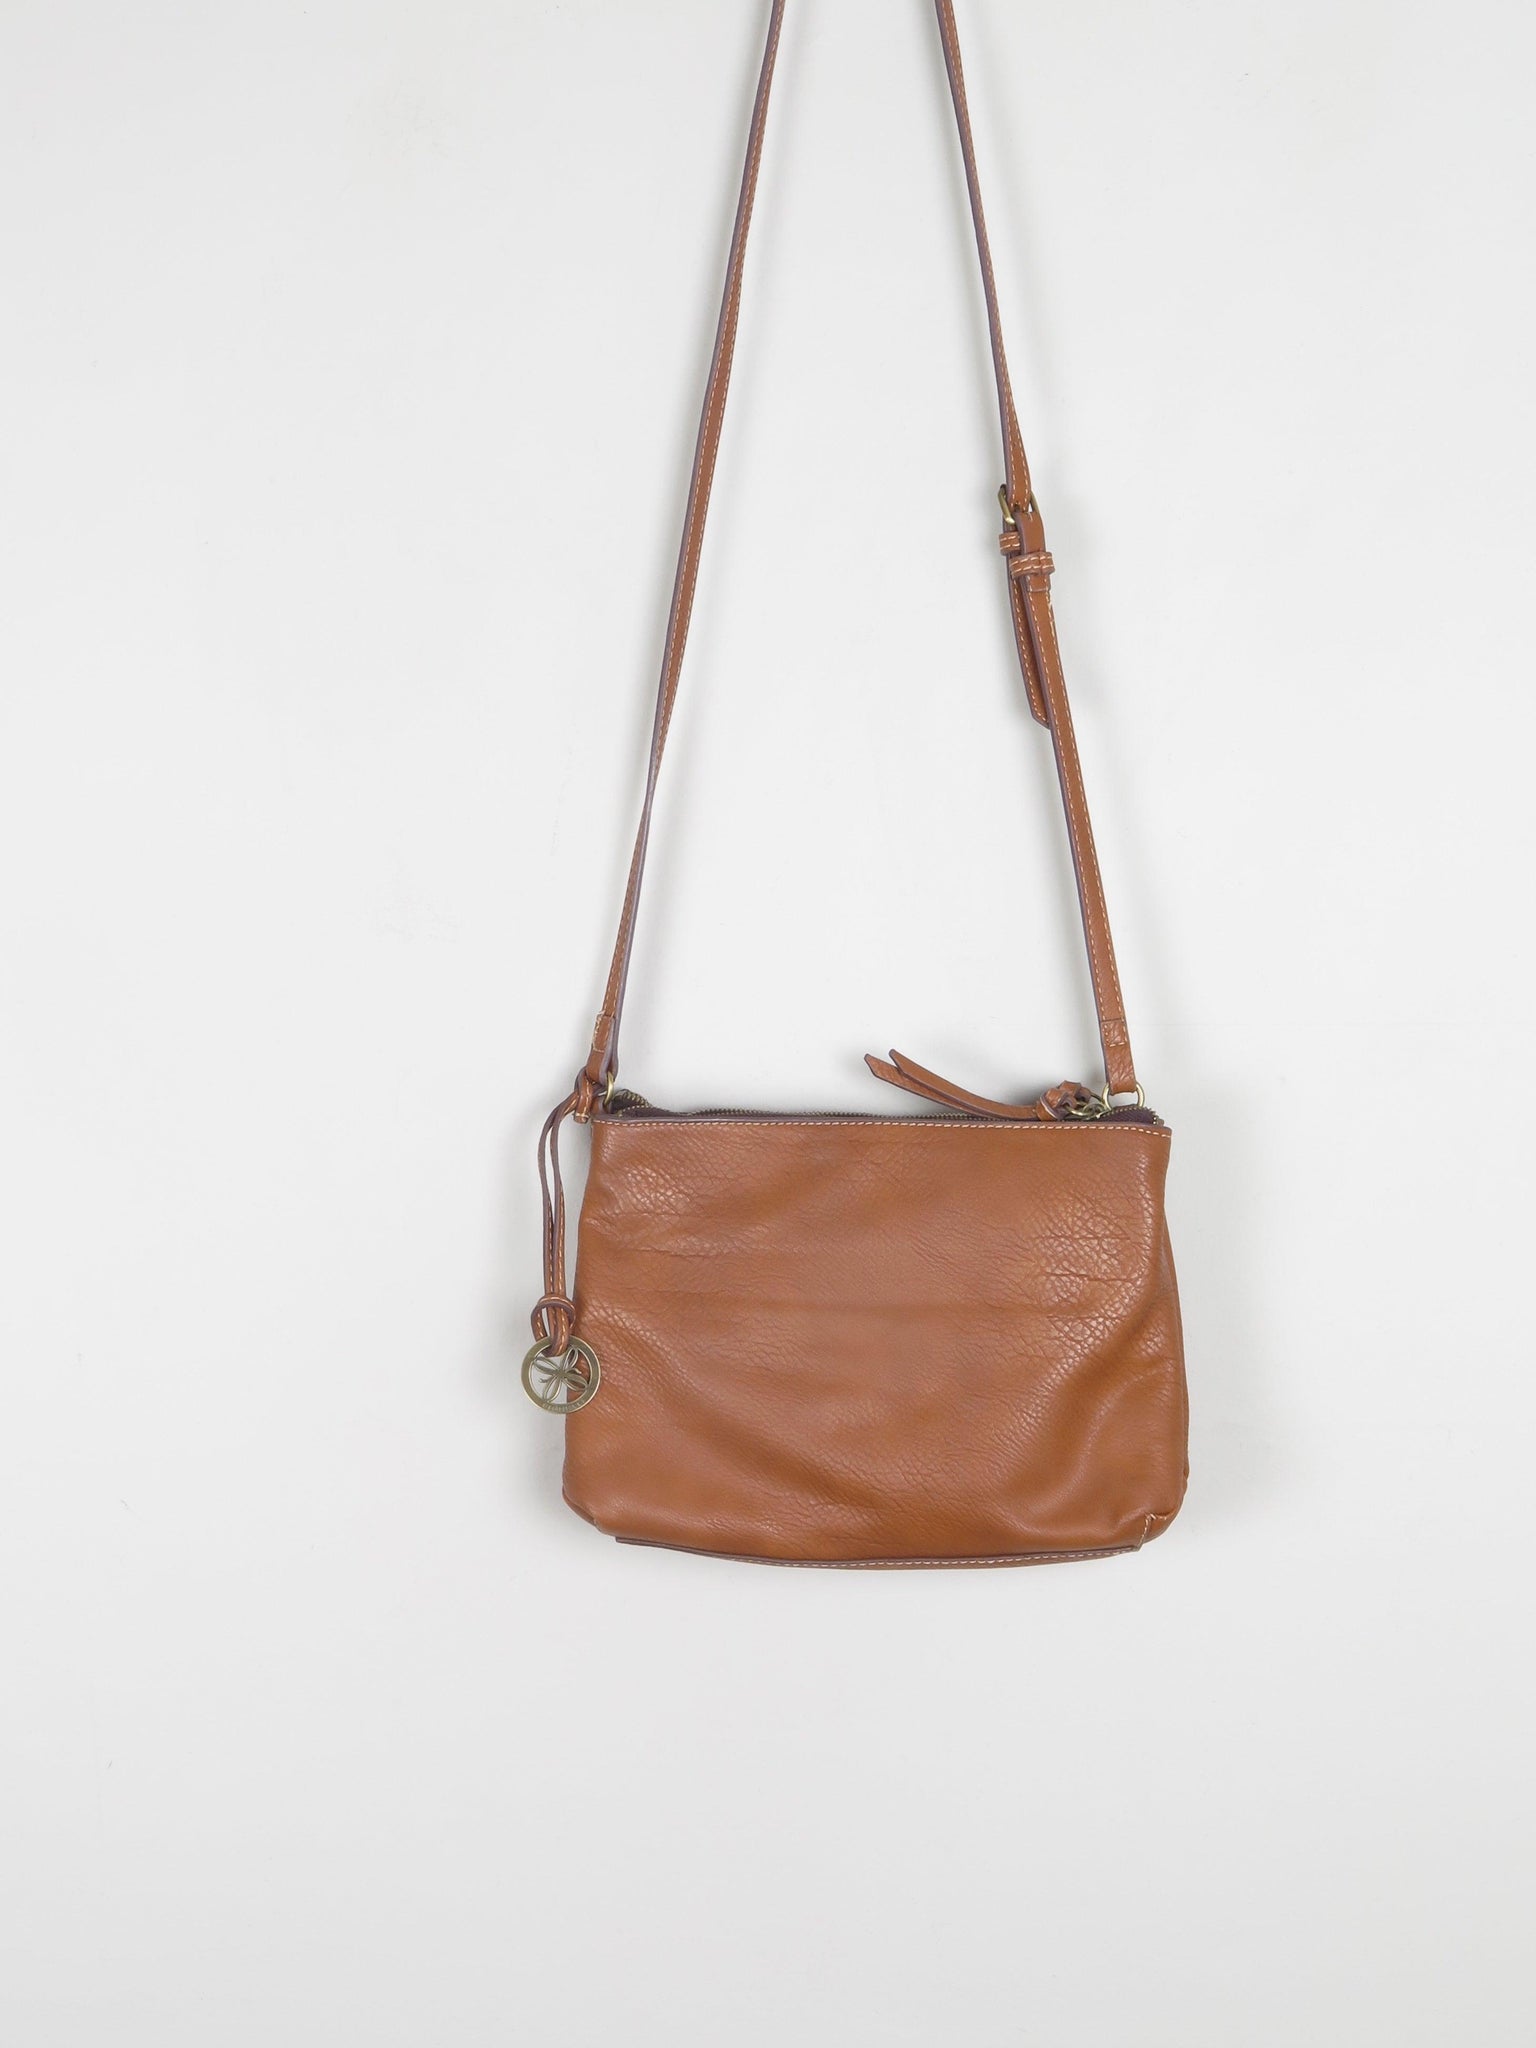 Tan Leather Fiorelli Cross Body Bag - The Harlequin